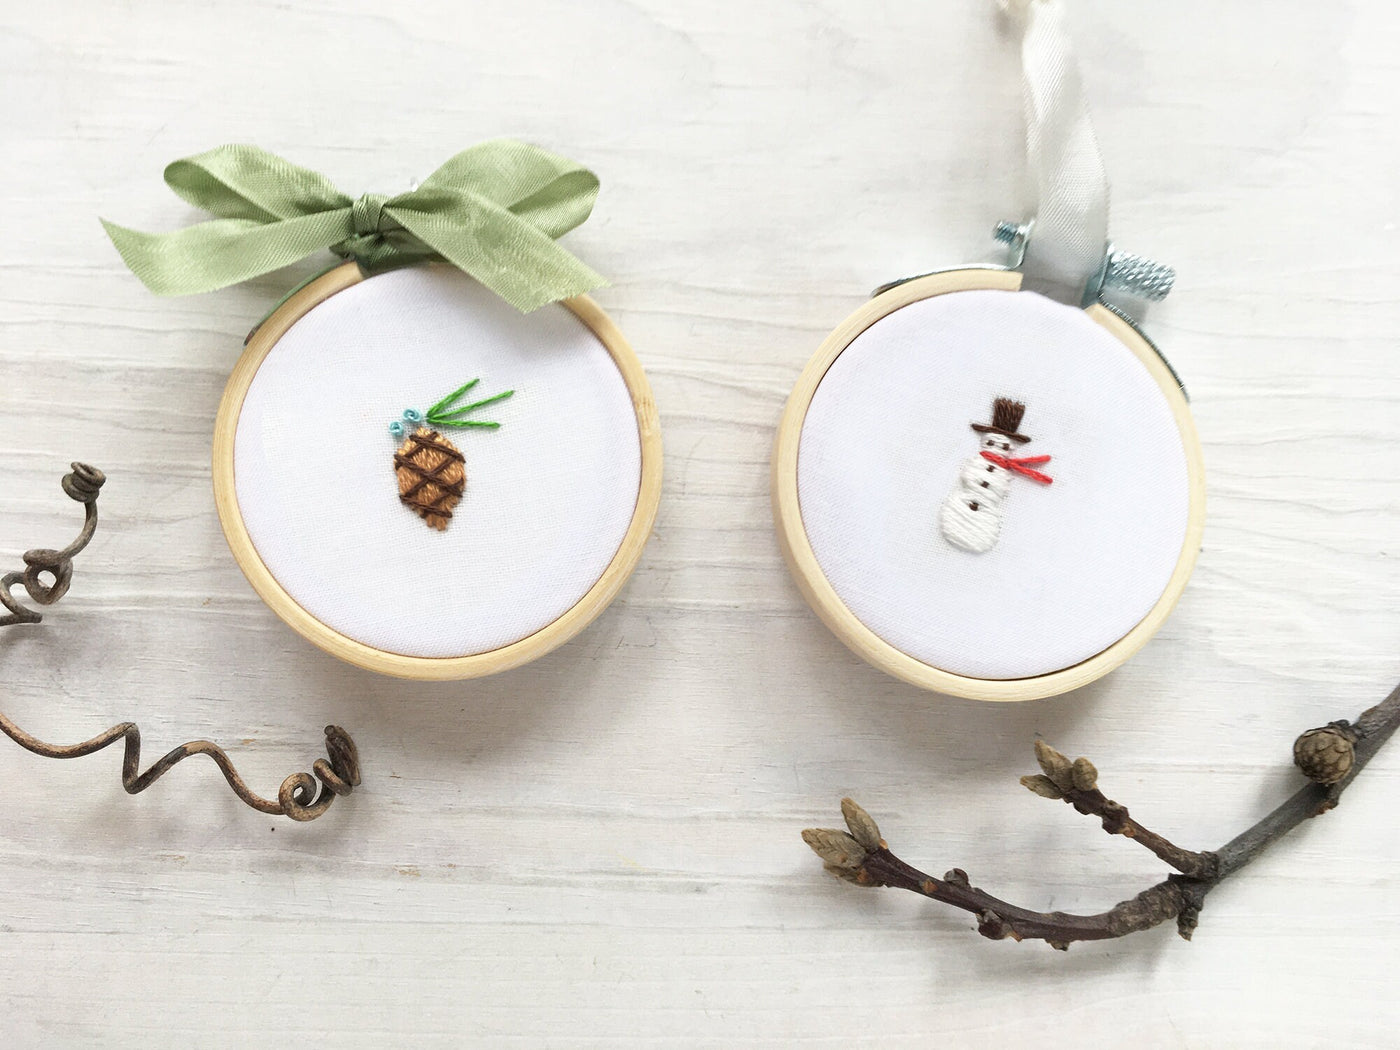 Mini embroidery hoop ornaments